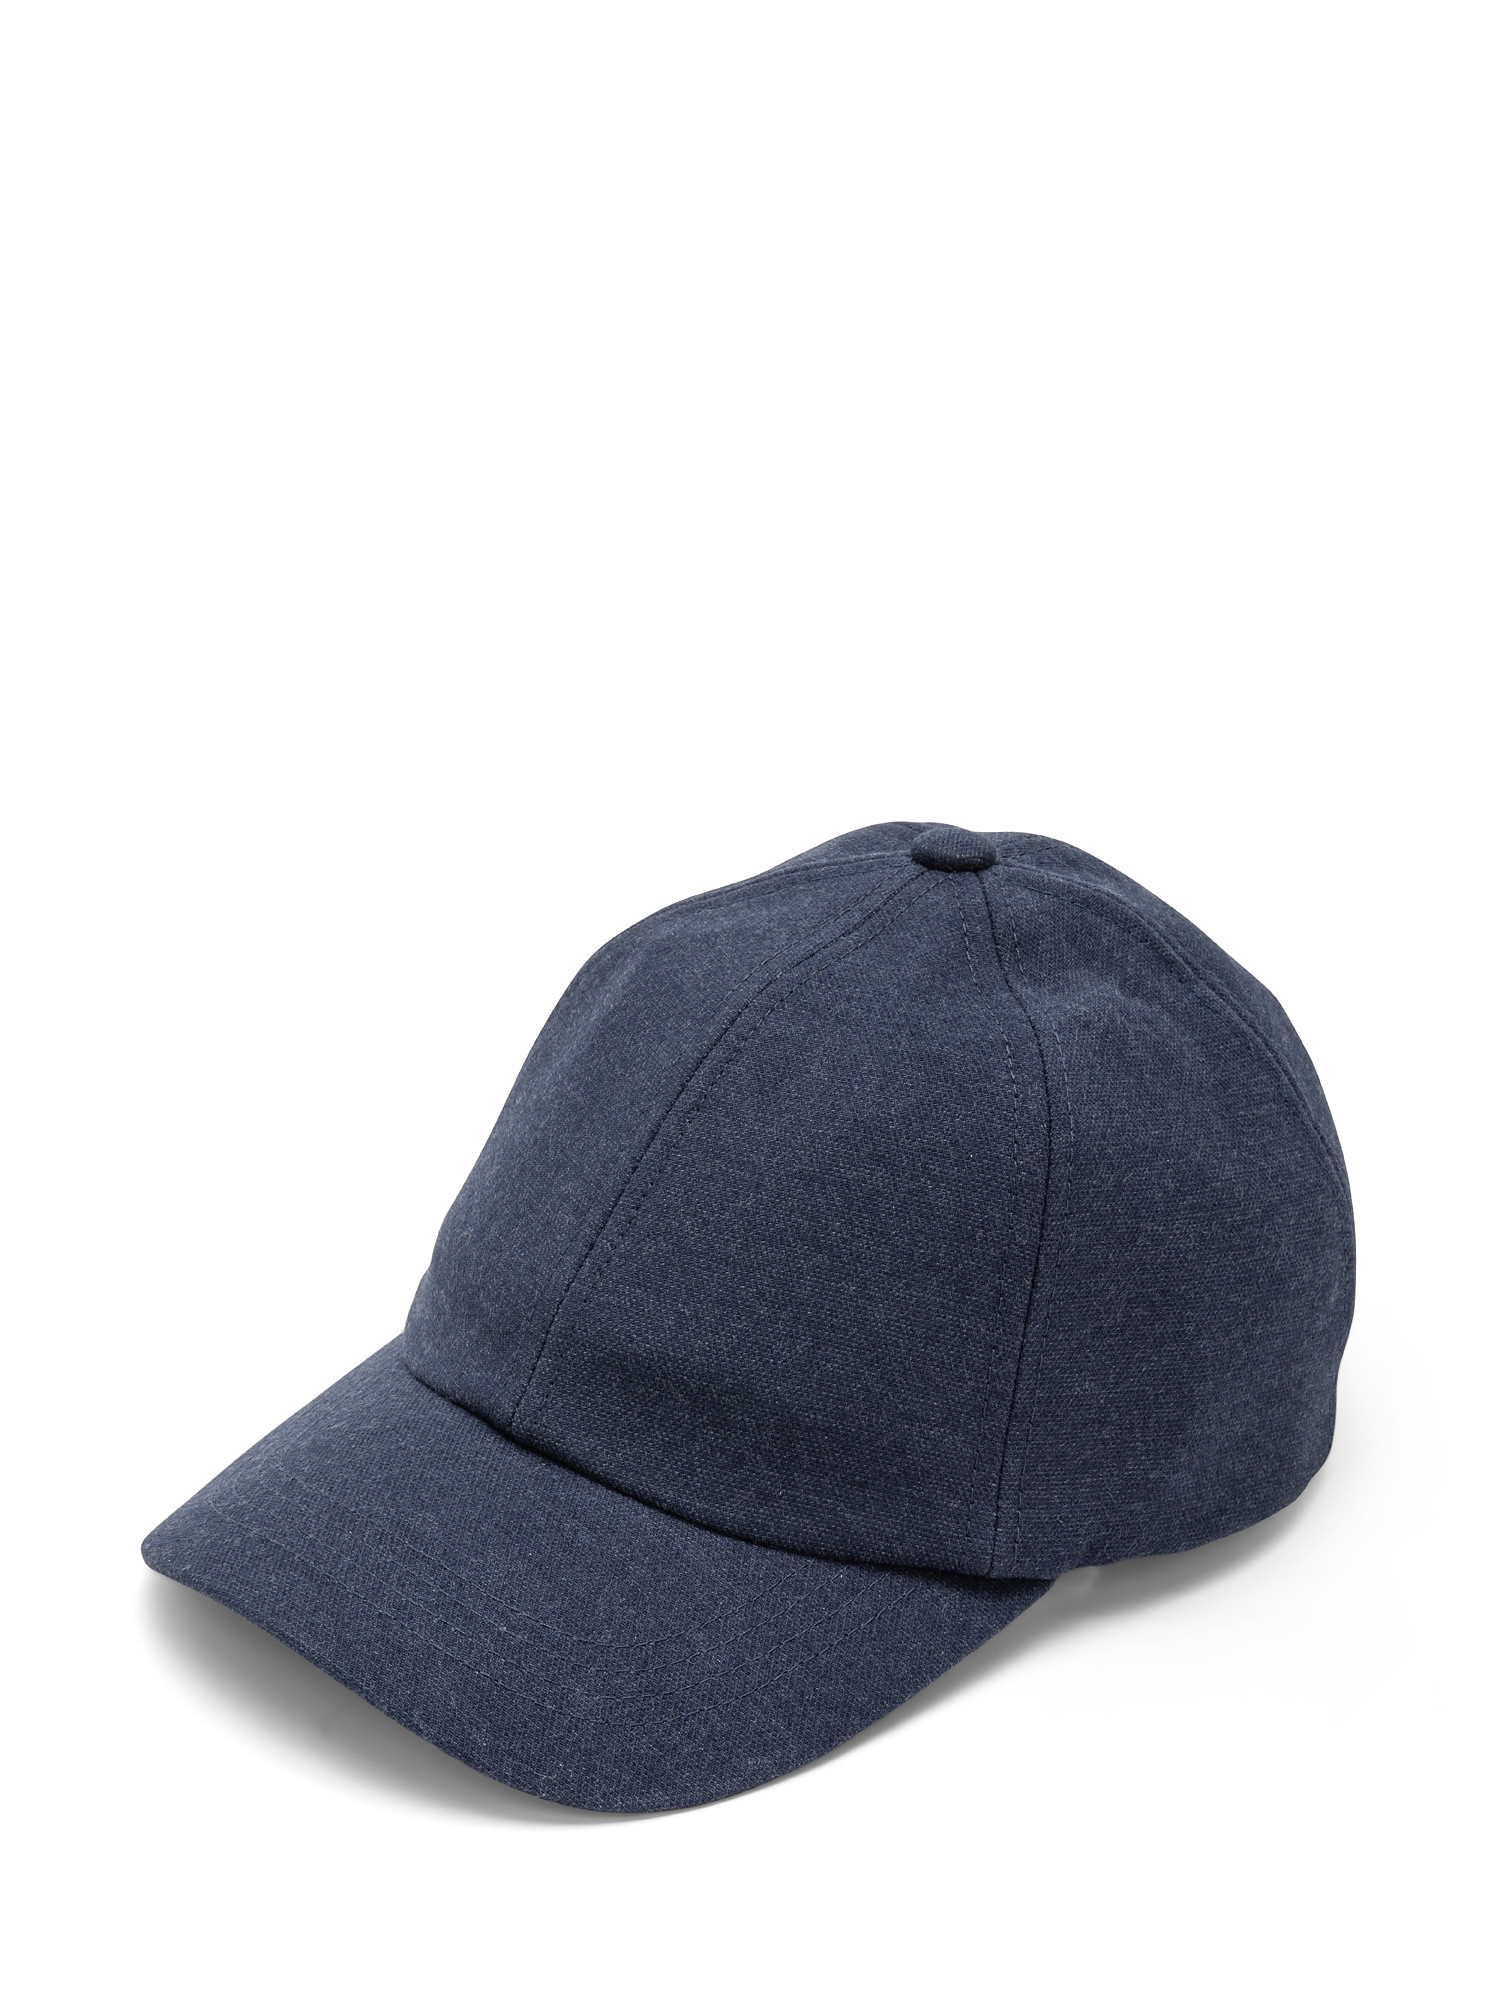 Cappello baseball, Blu, large image number 0